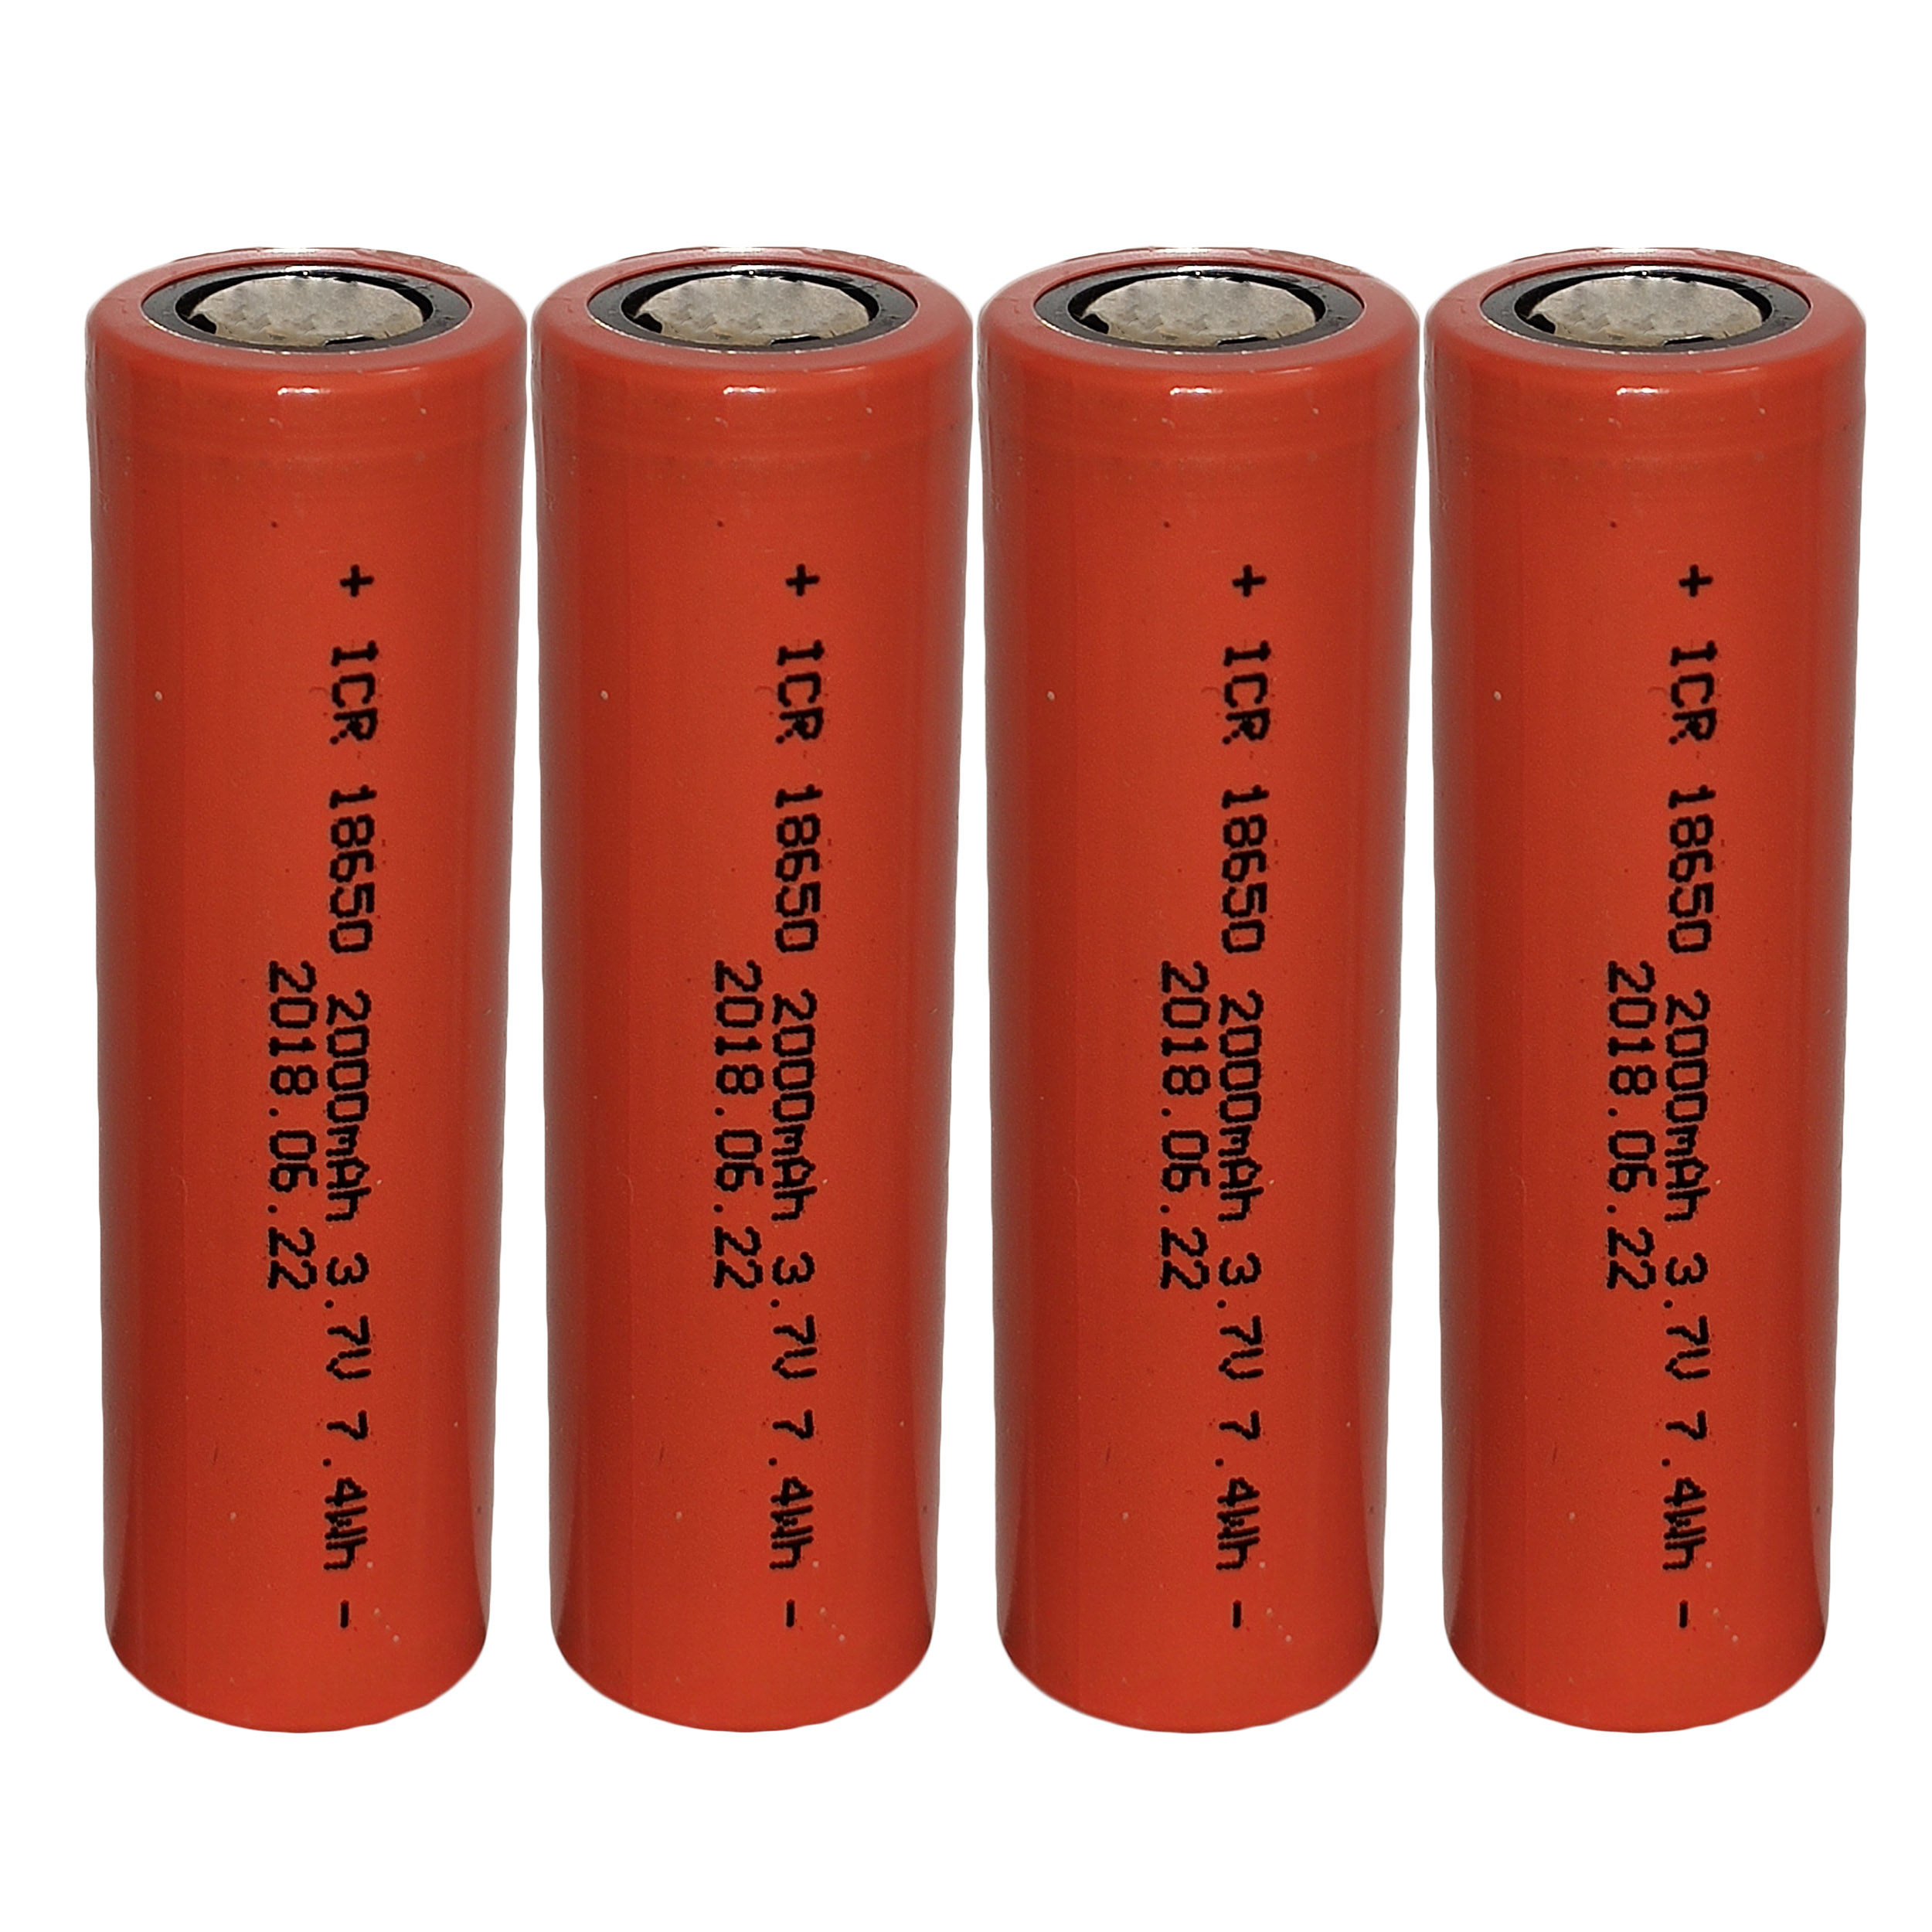 باتری لیتیوم یون قابل شارژ مدل al-2600 ظرفیت 2000 میلی آمپر ساعت بسته 4 عددی